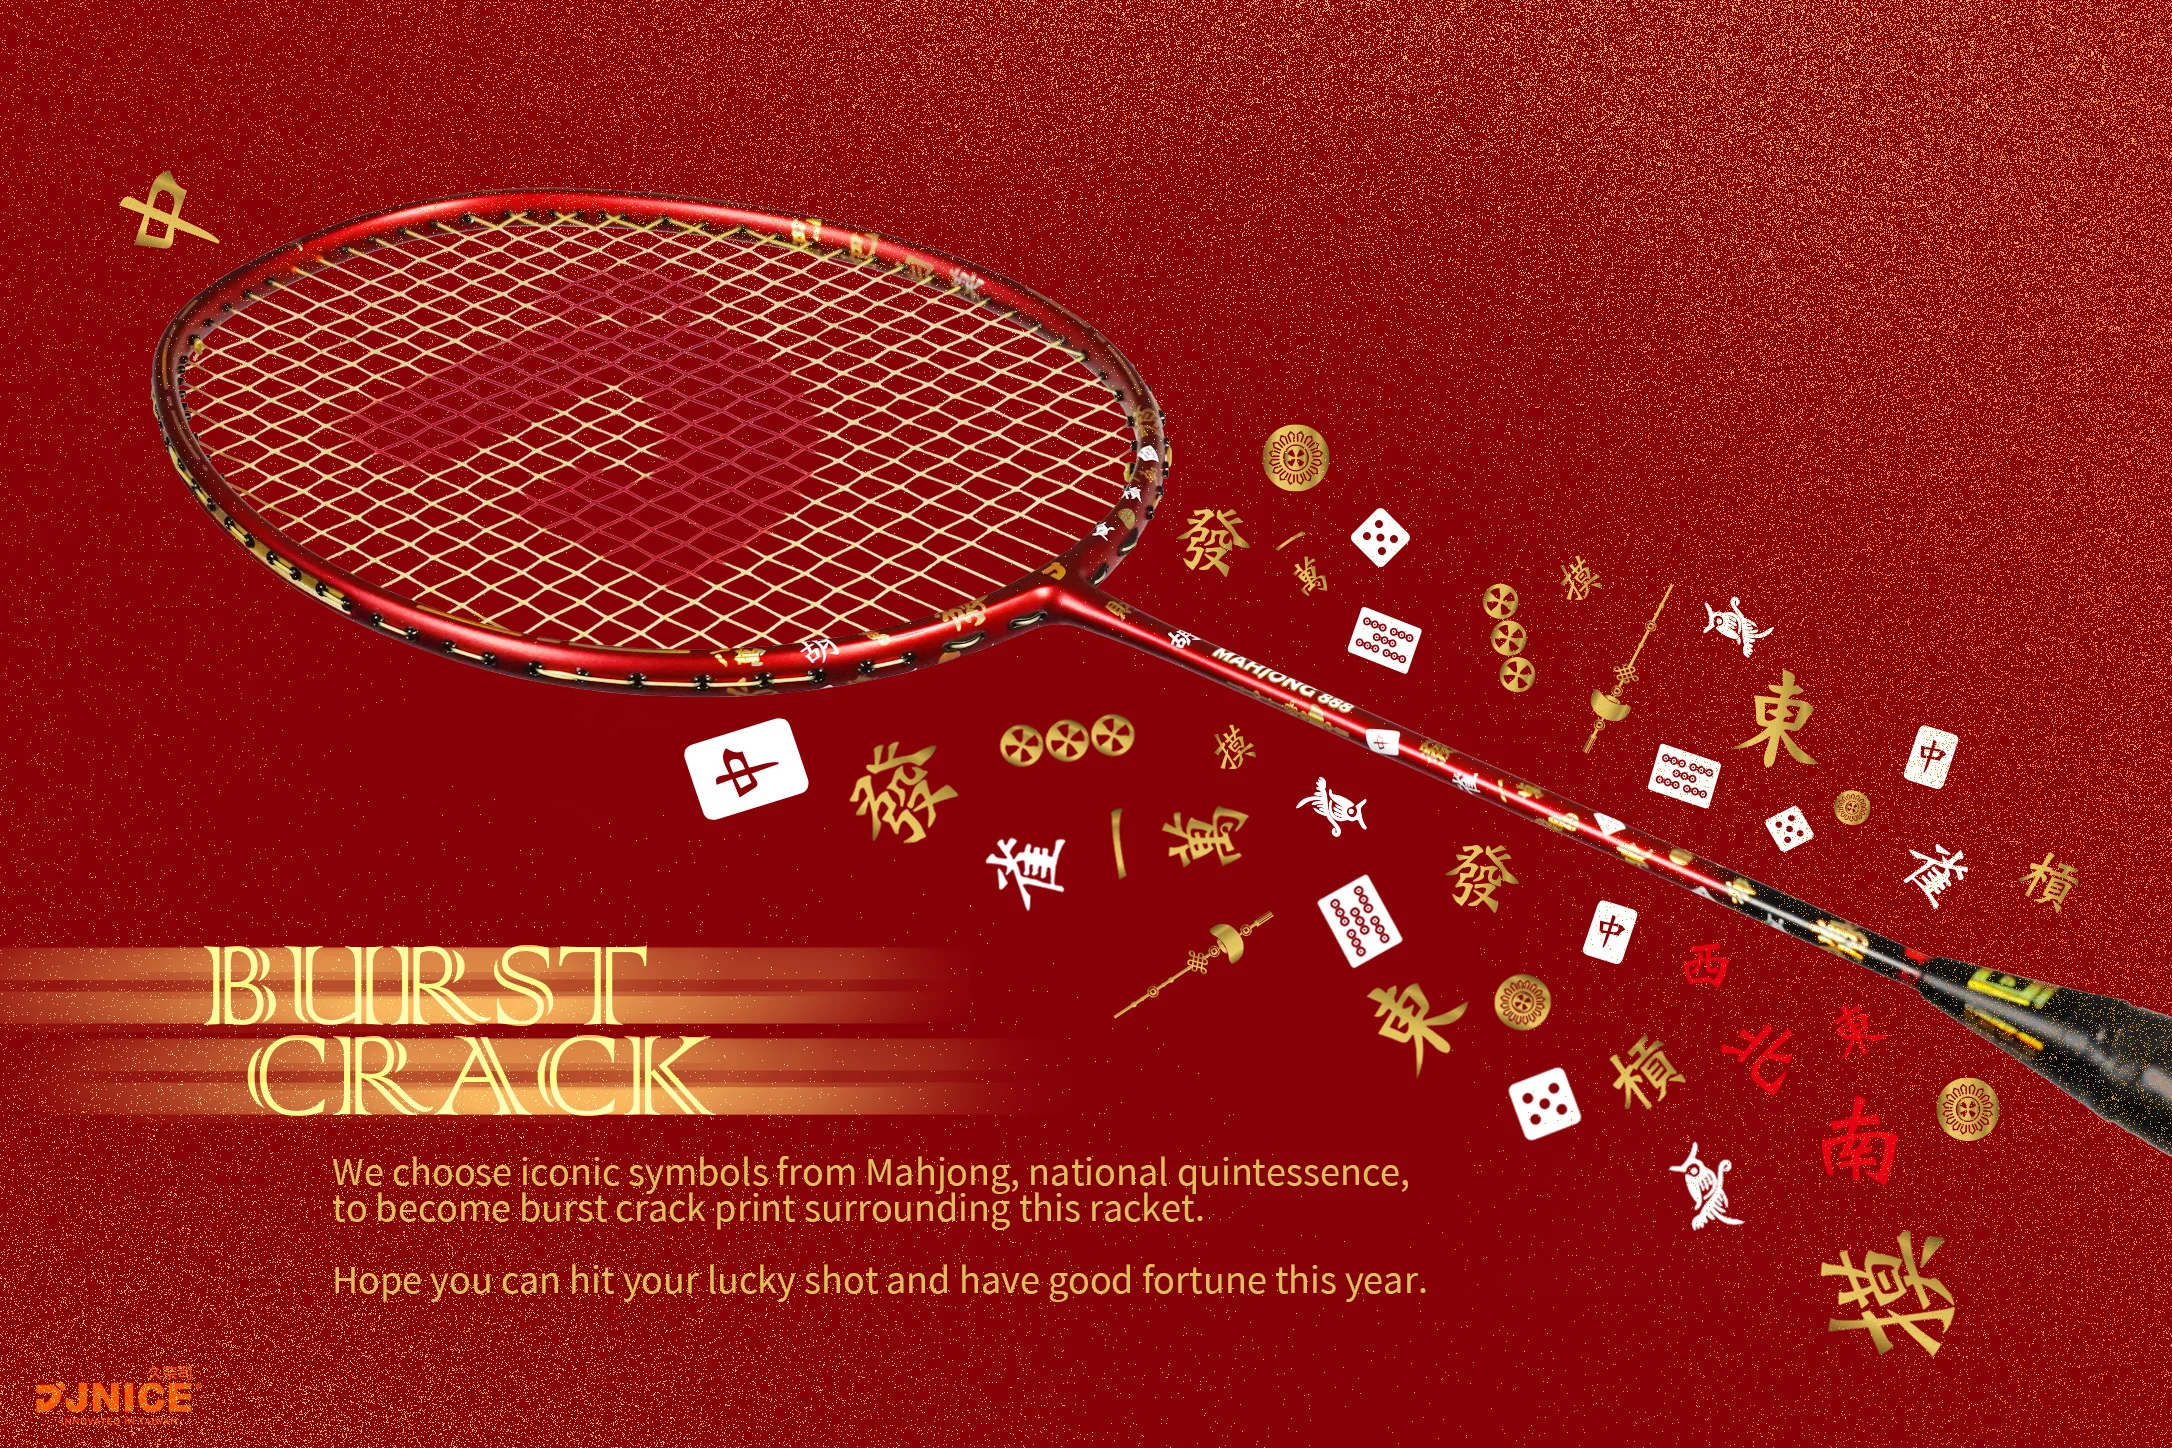 jnice mahjong 888 badminton racket